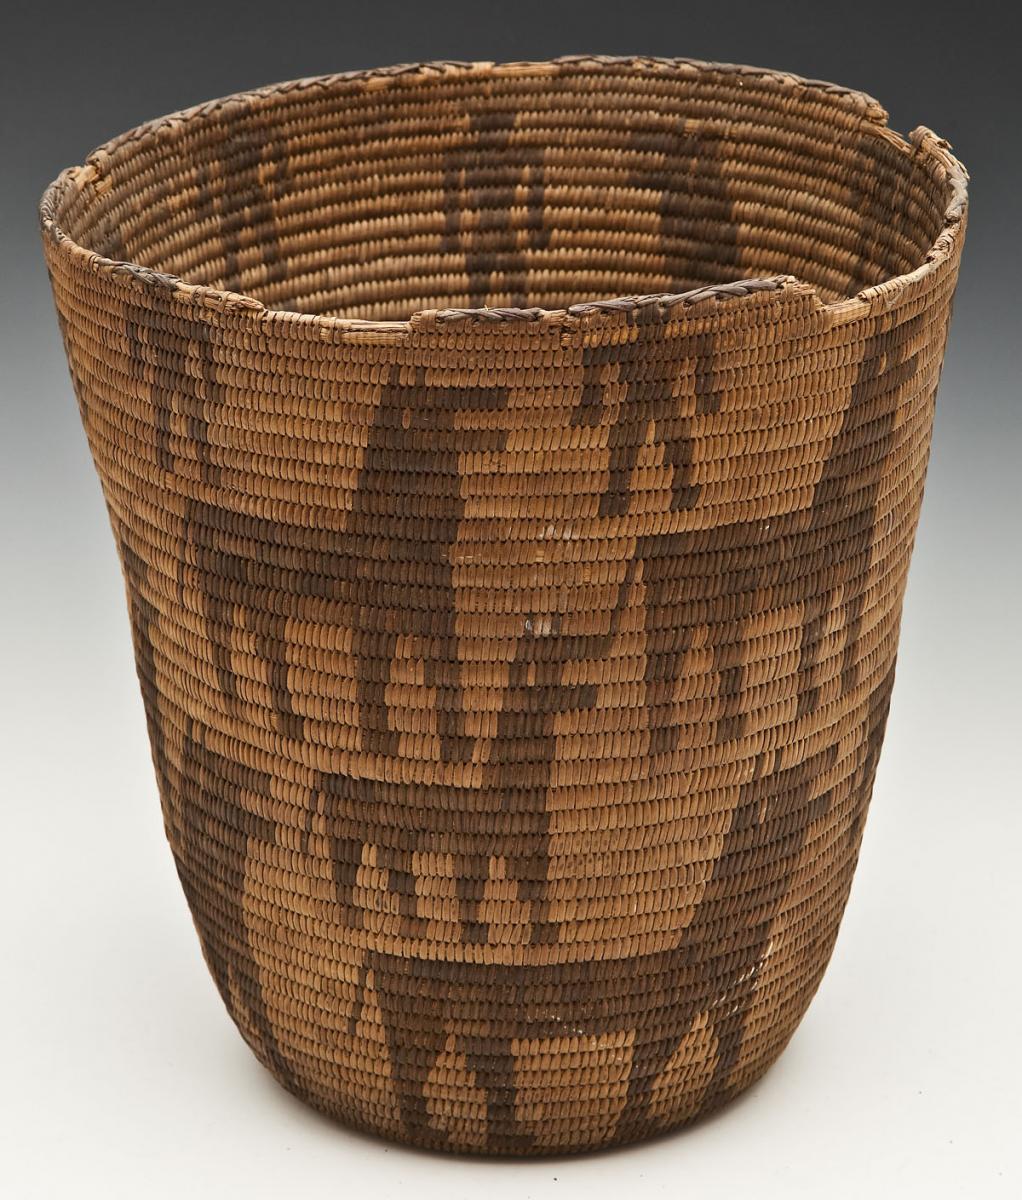 Pima Figural Coil Basket ($600)